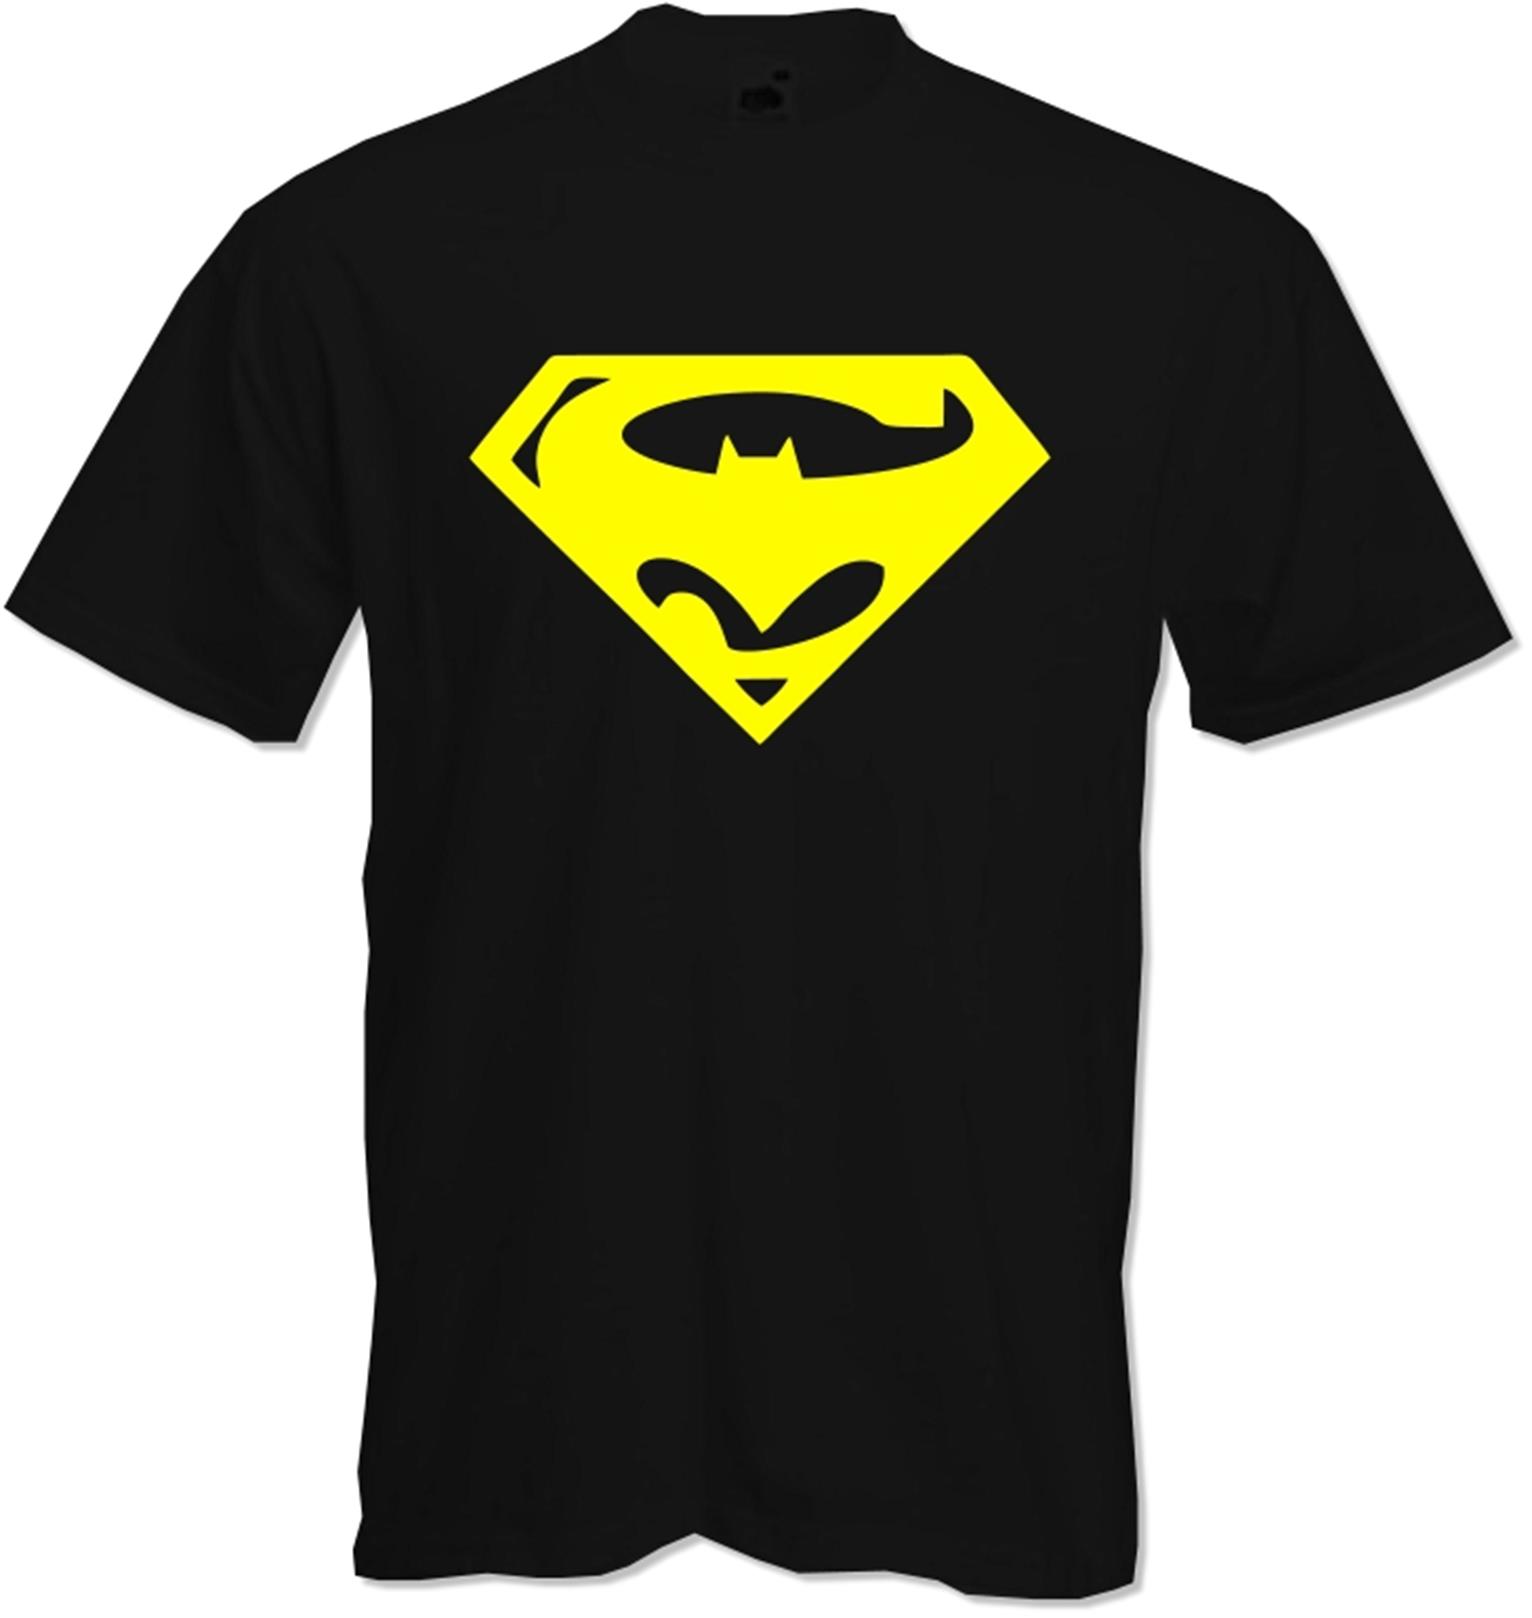 SUPERMAN / BATMAN COMBINED - SUPERHERO - Quality T Shirt - *NEW* | eBay